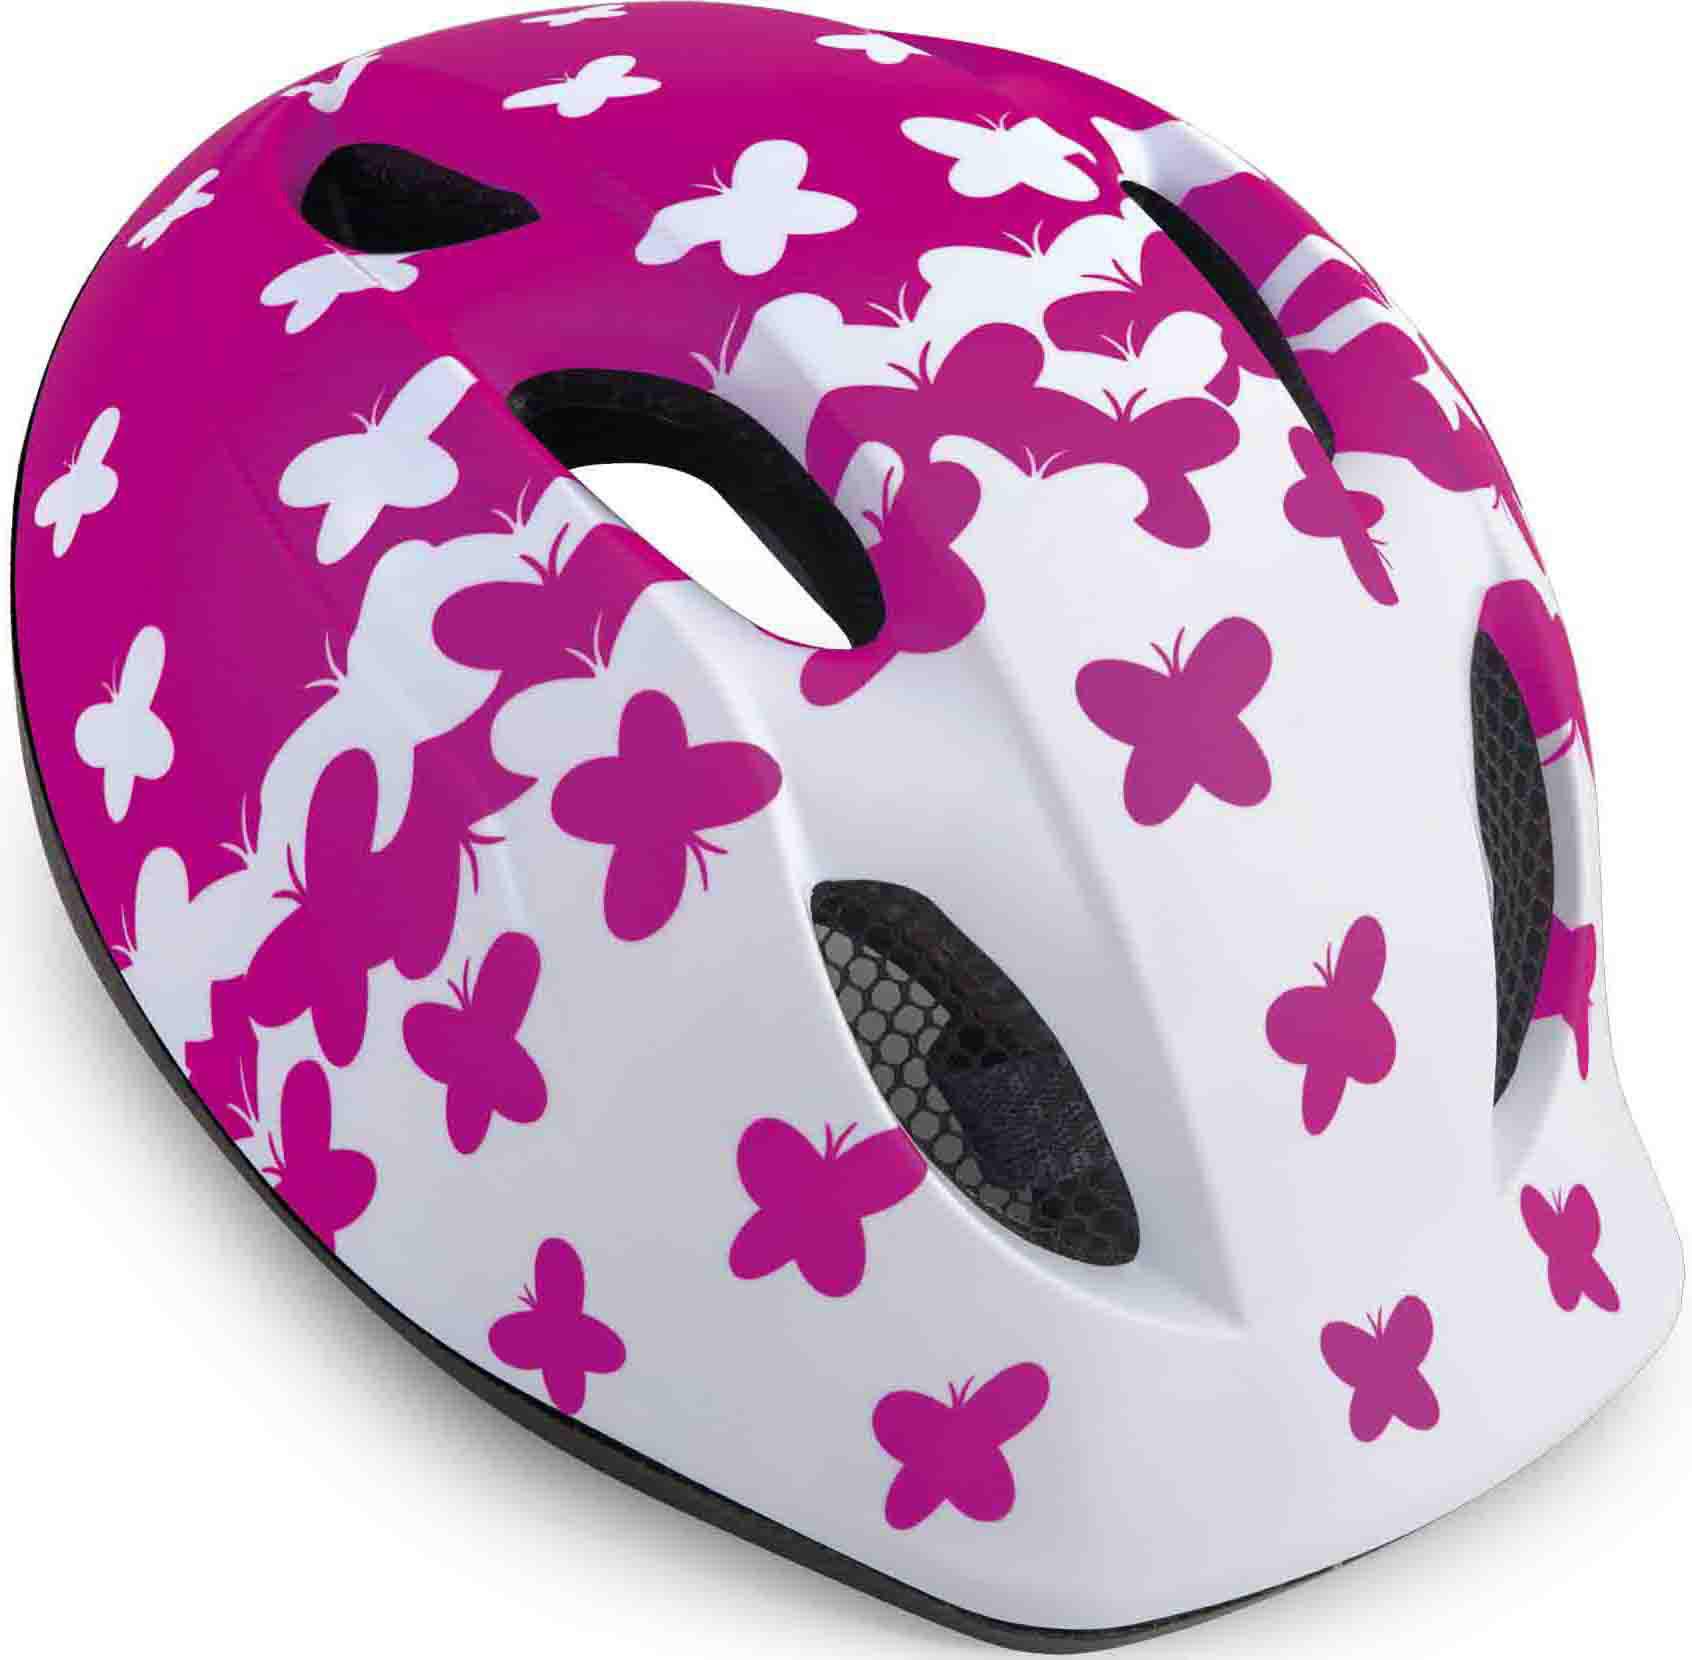 Met Super Buddy Kids Helmet White Pink Butterfly 46-53Cm